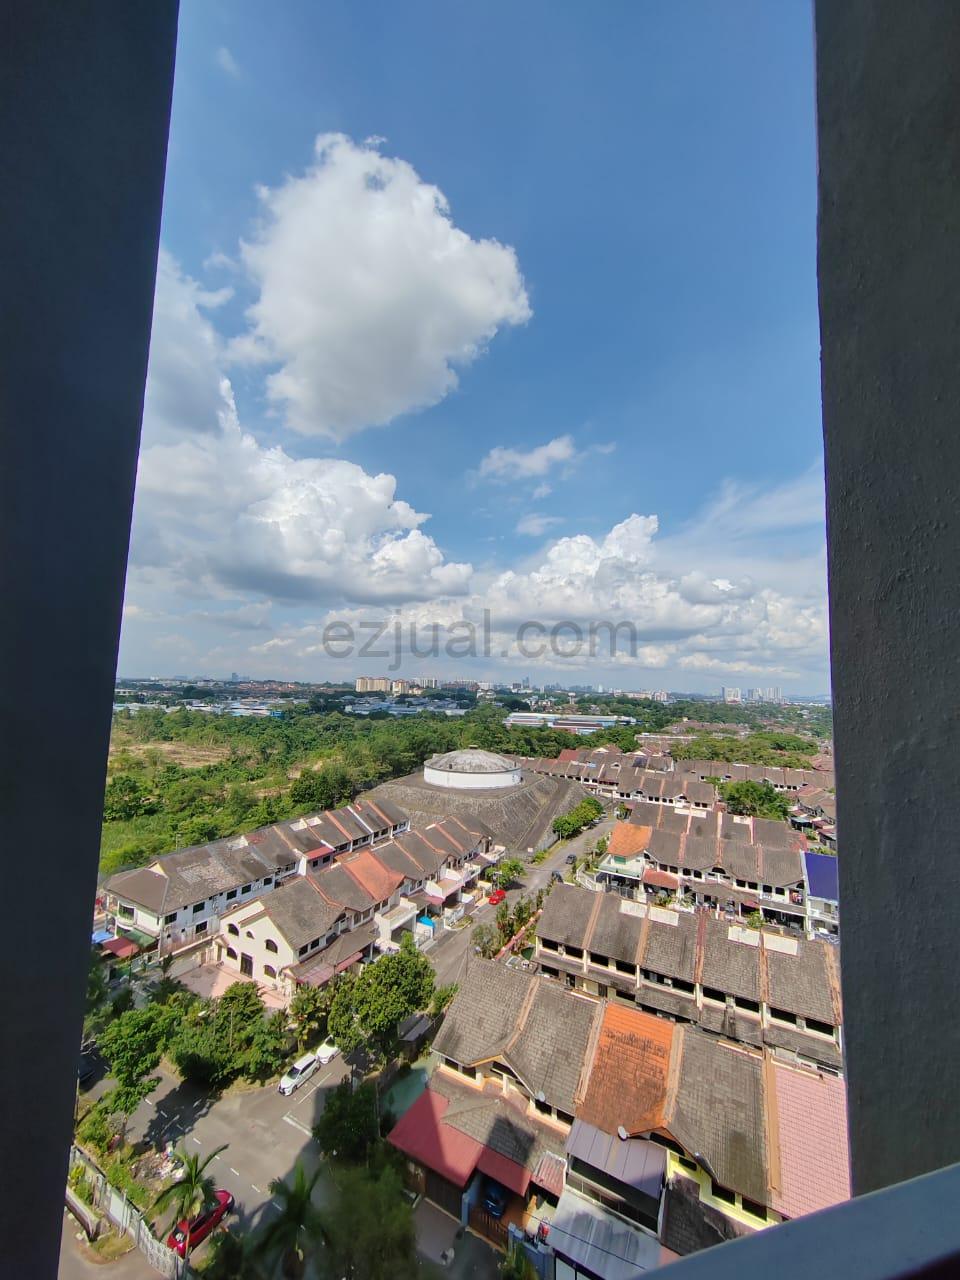 Mewah View Apartment@Tmn Bukit Mewah 4+1rooms For Sale (Unblock View)